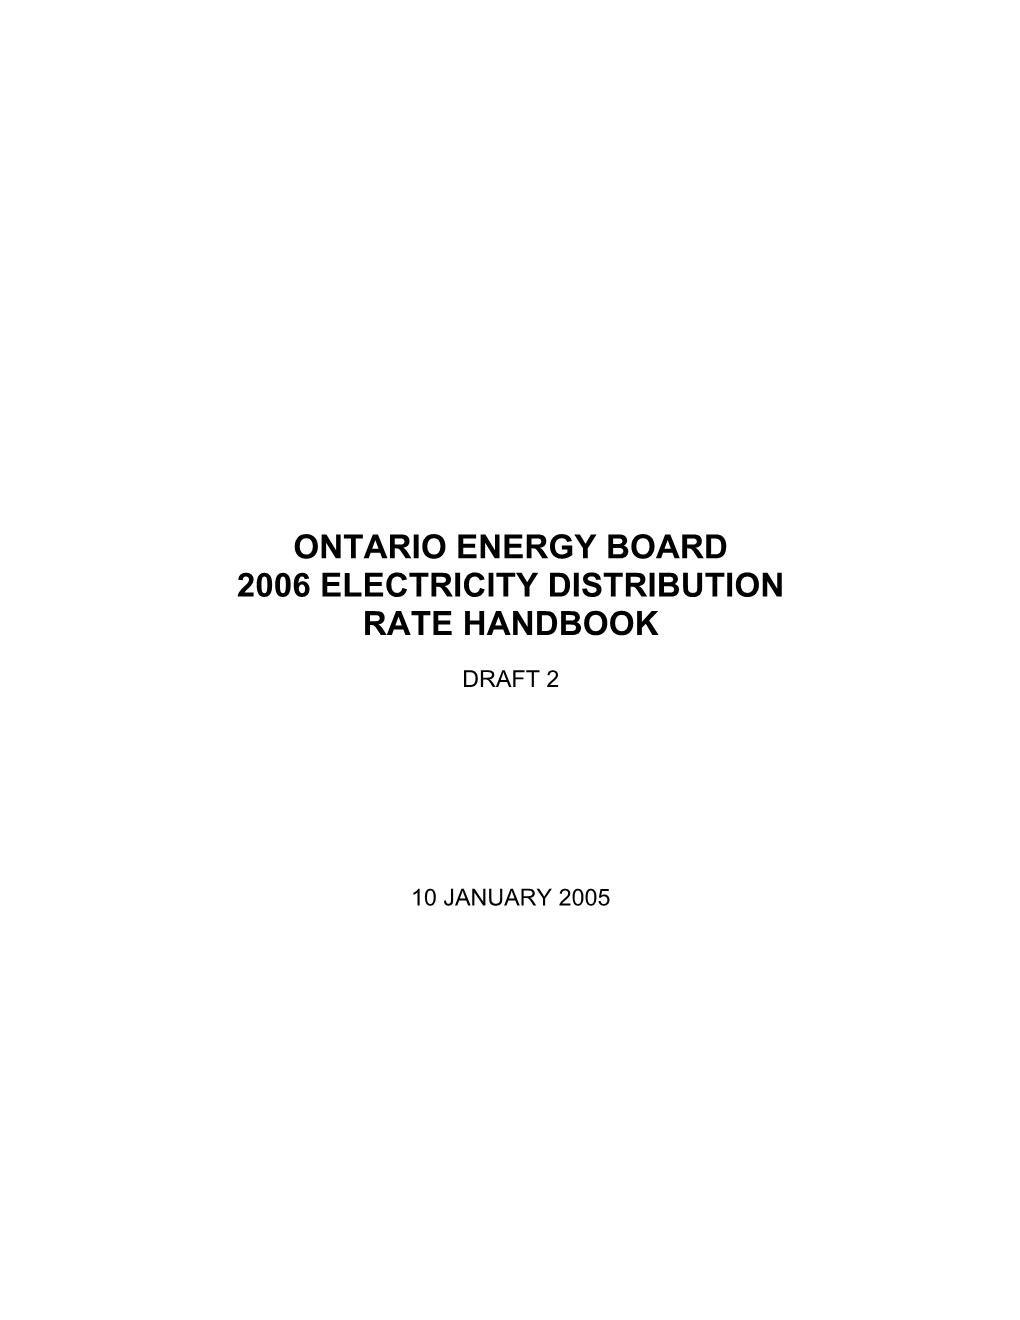 Ontario Energy Board